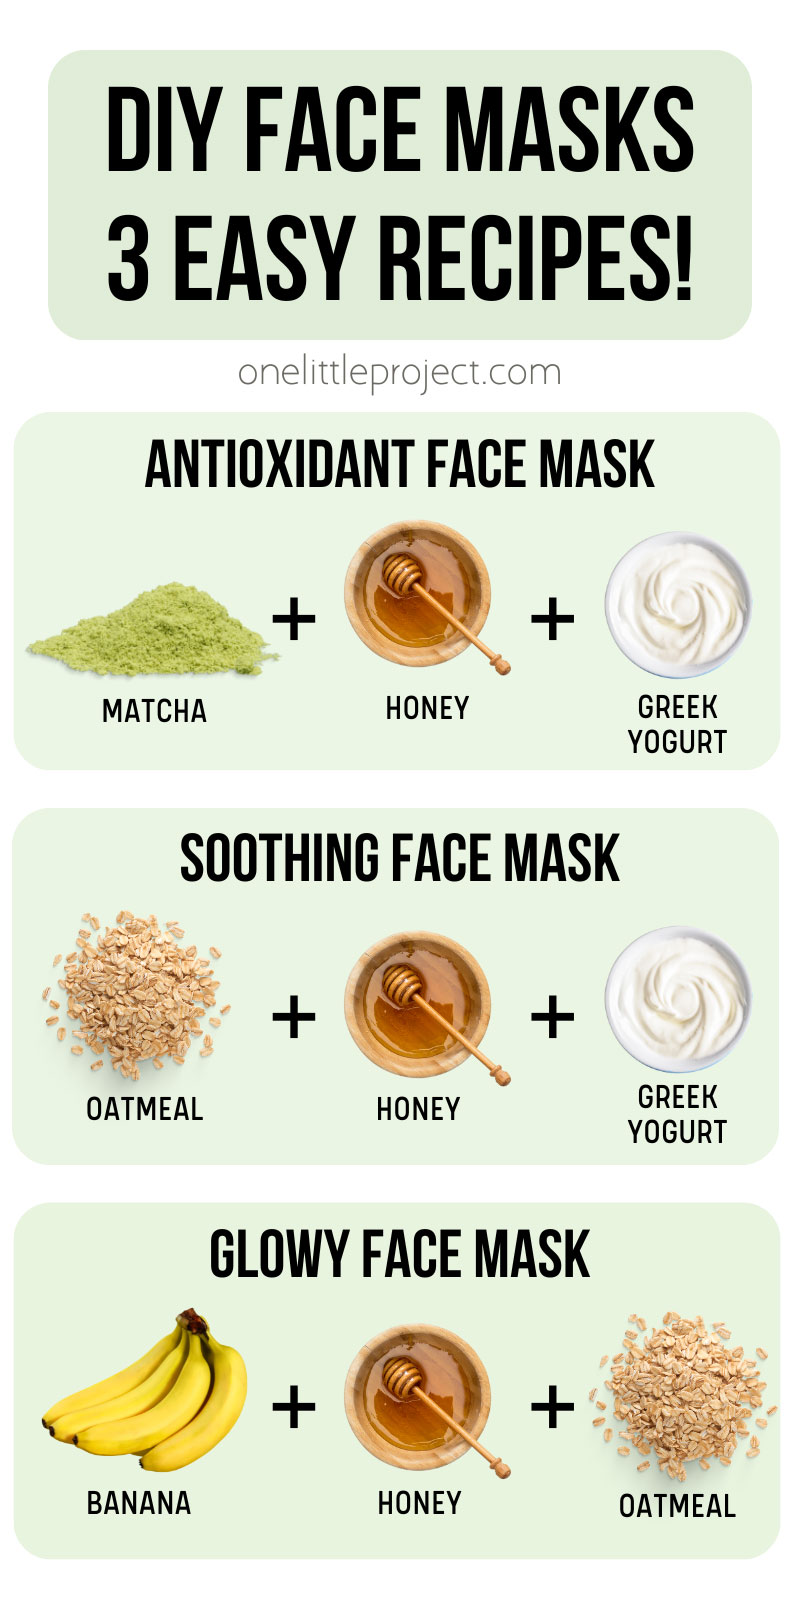 3 easy recipes for DIY face masks